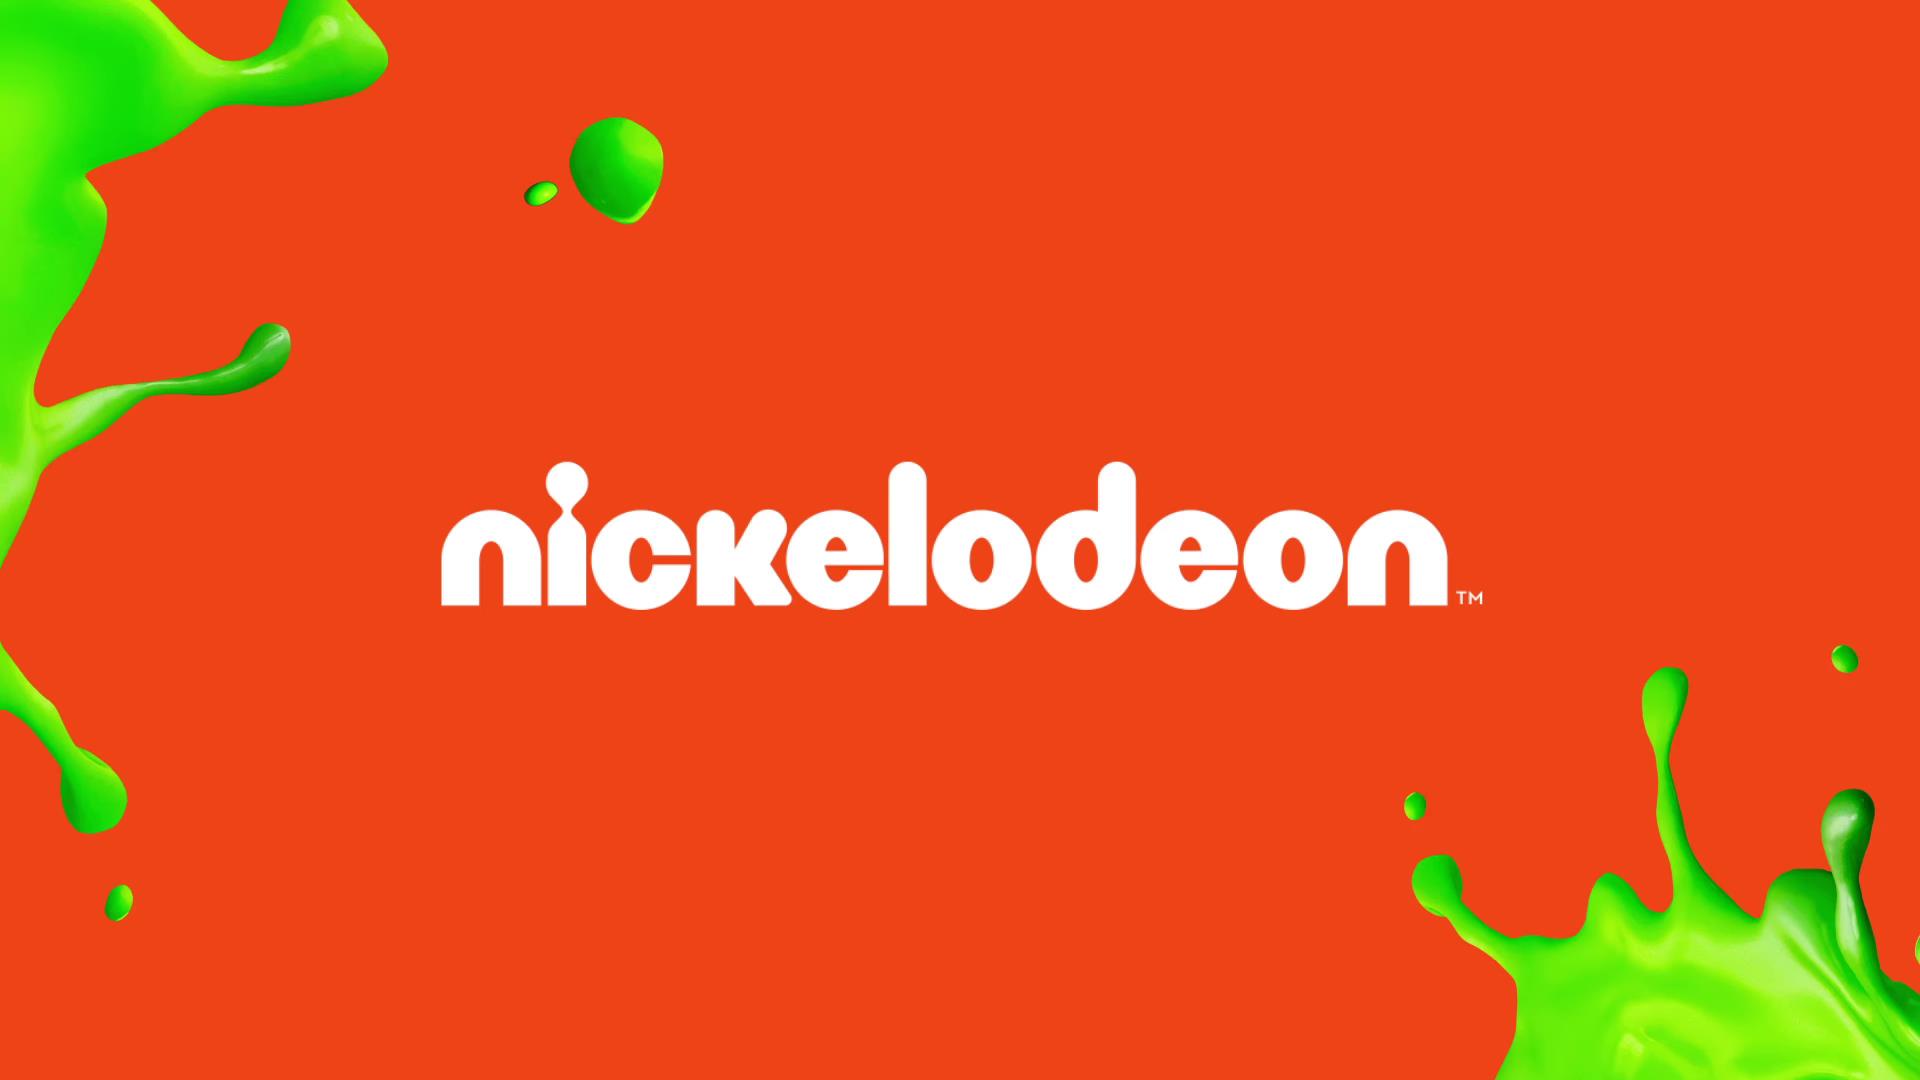 Nick channel. Канал Nickelodeon. Nickelodeon логотип. Телеканал Никелодеон. Заставка Никелодеон.